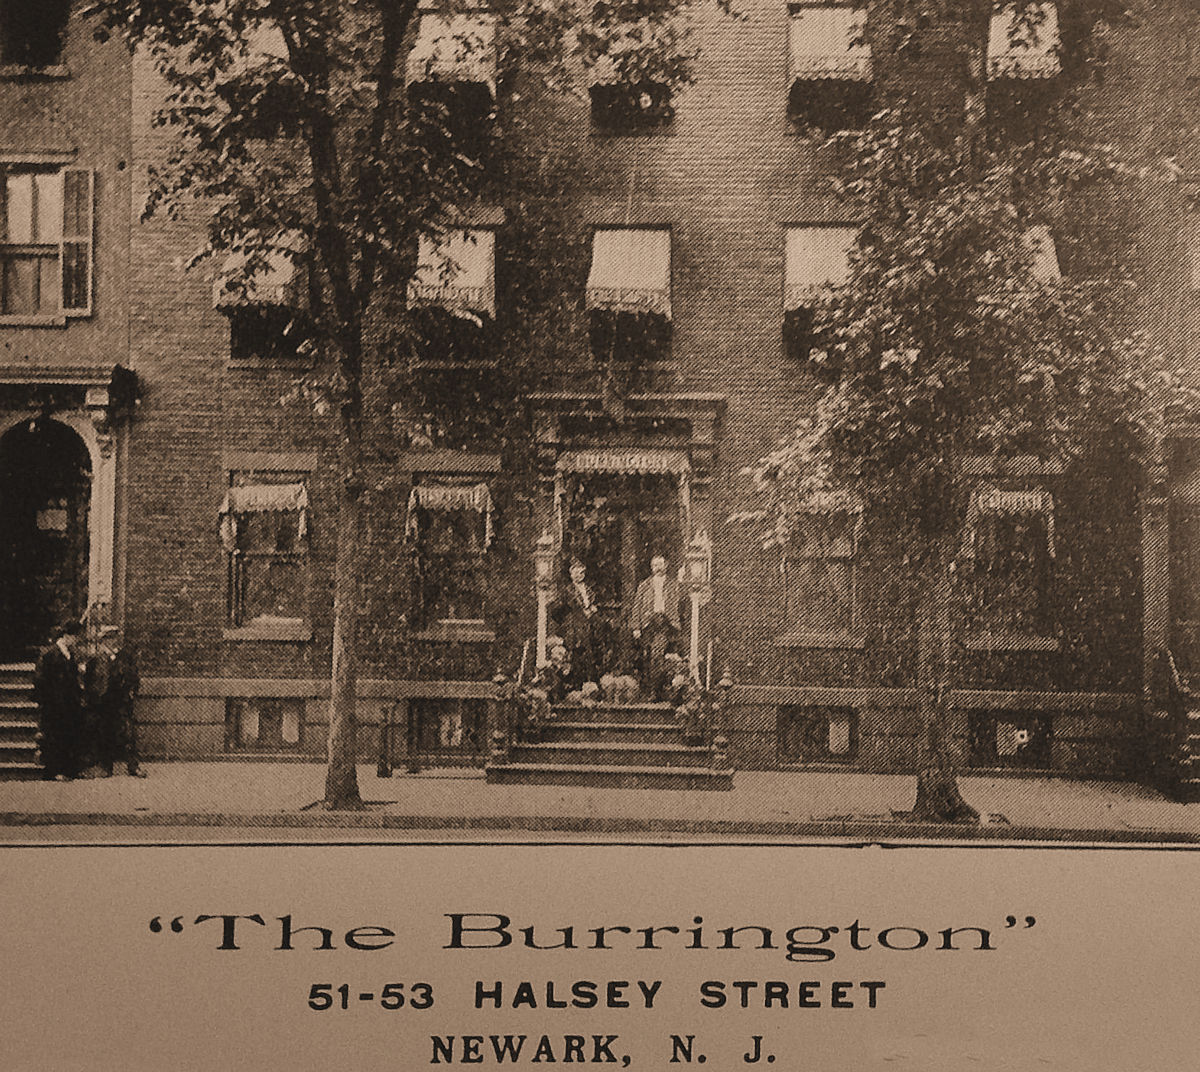 51 Halsey Street
Postcard
